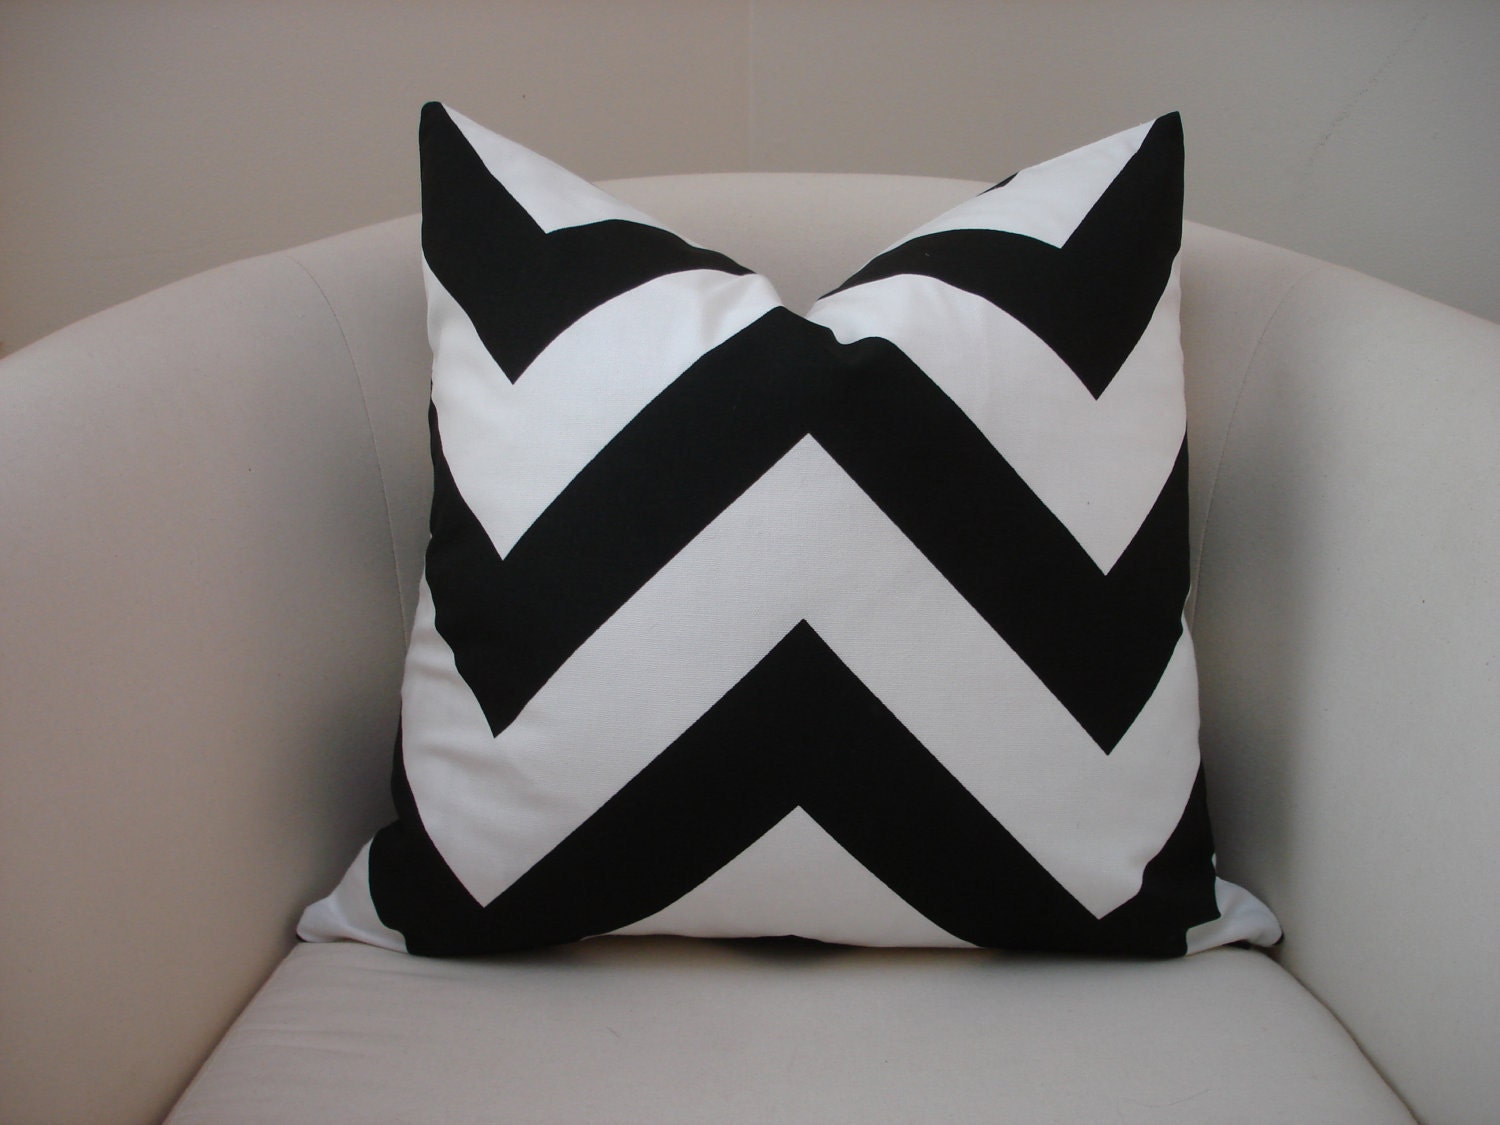 20" x 20" Black and White Chevron Pattern Pillow Cover